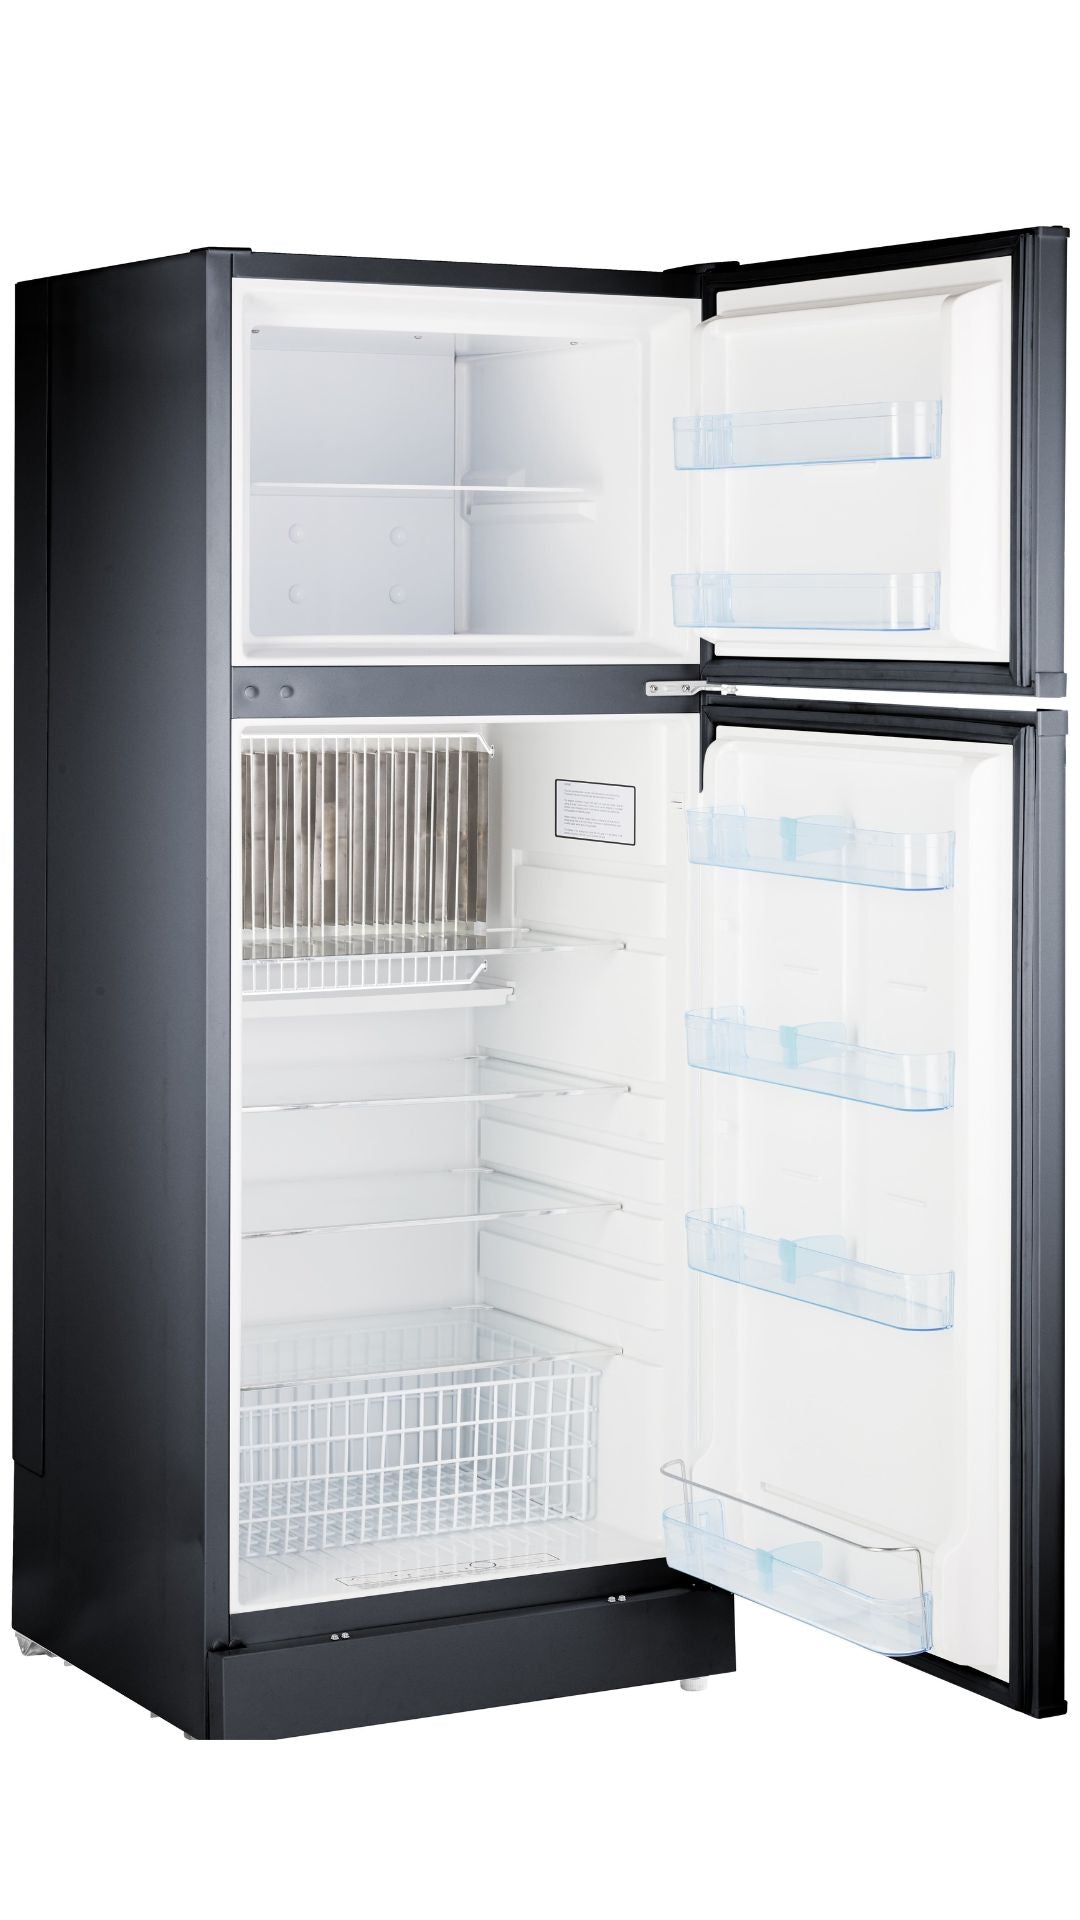 Unique Appliances - 27.2 Inch 14 cu. ft Top Mount Refrigerator in Midnight Black - UGP-14C CM B